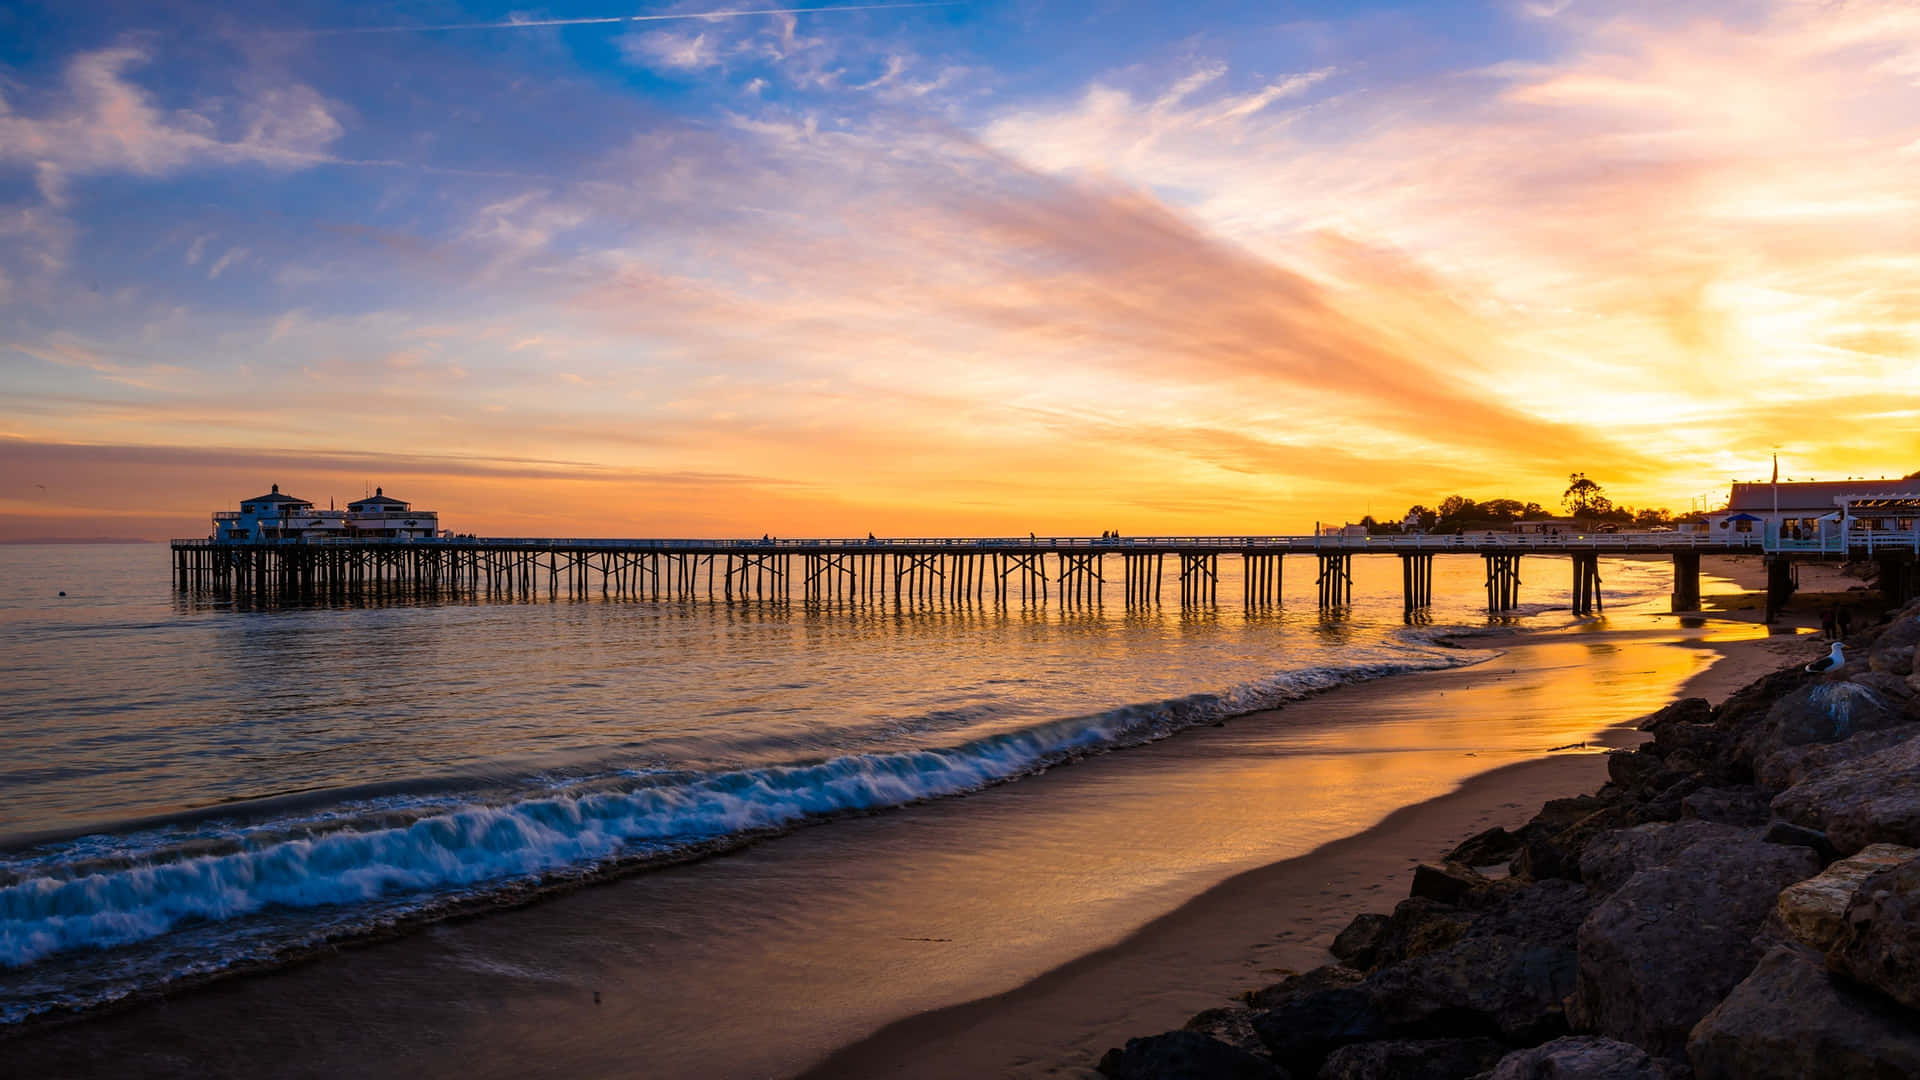 1440p Malibu Pier Golden Sunset Background